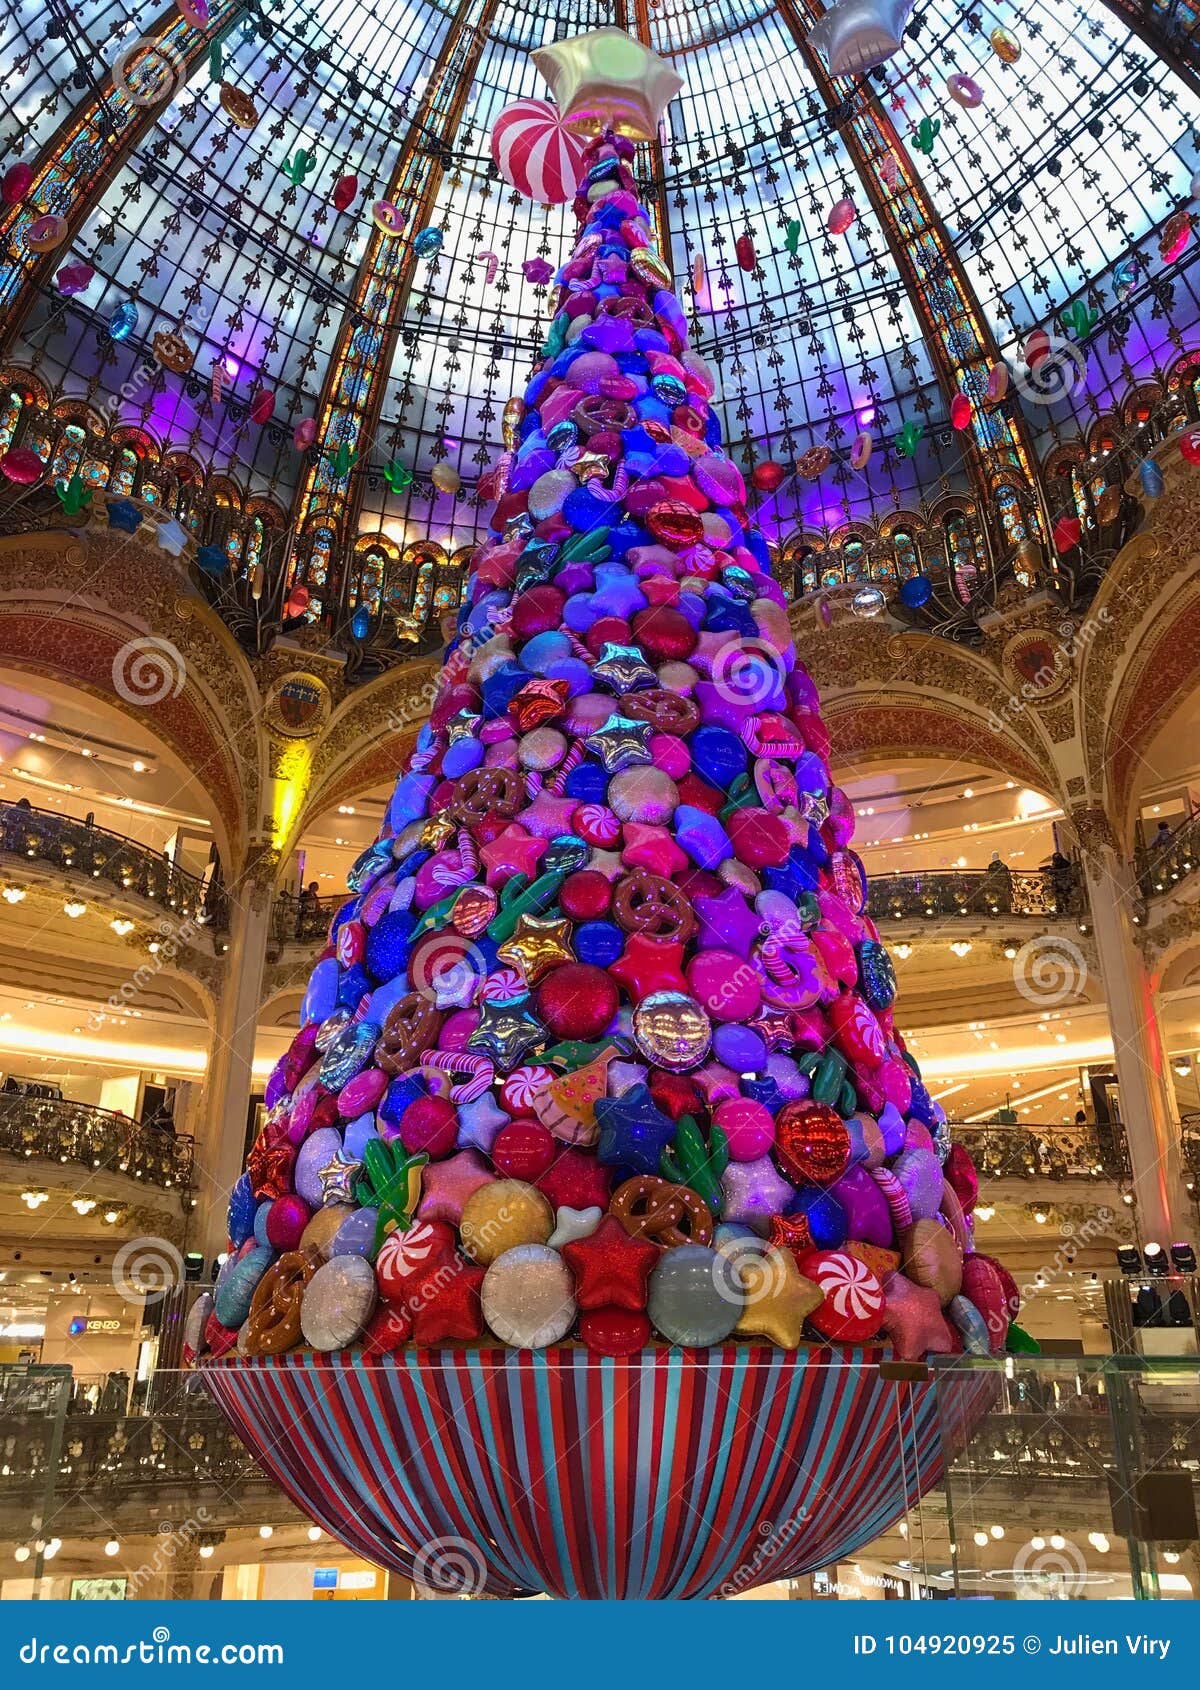 Galeries Lafayette Paris Christmas Tree Decoration Editorial Image ...